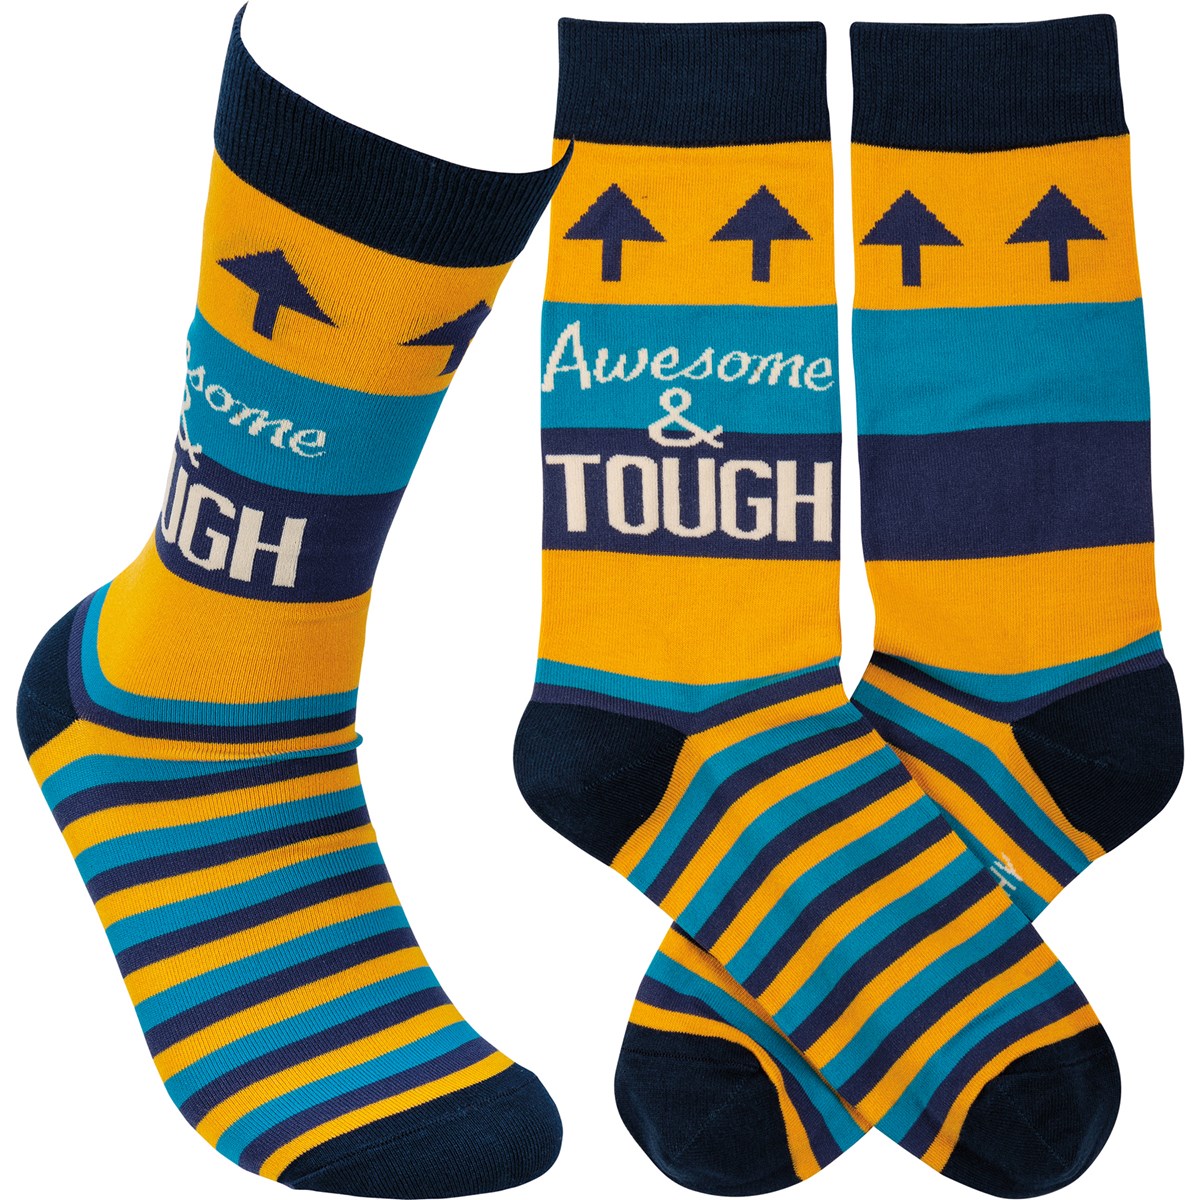 Socks Awesome & Tough